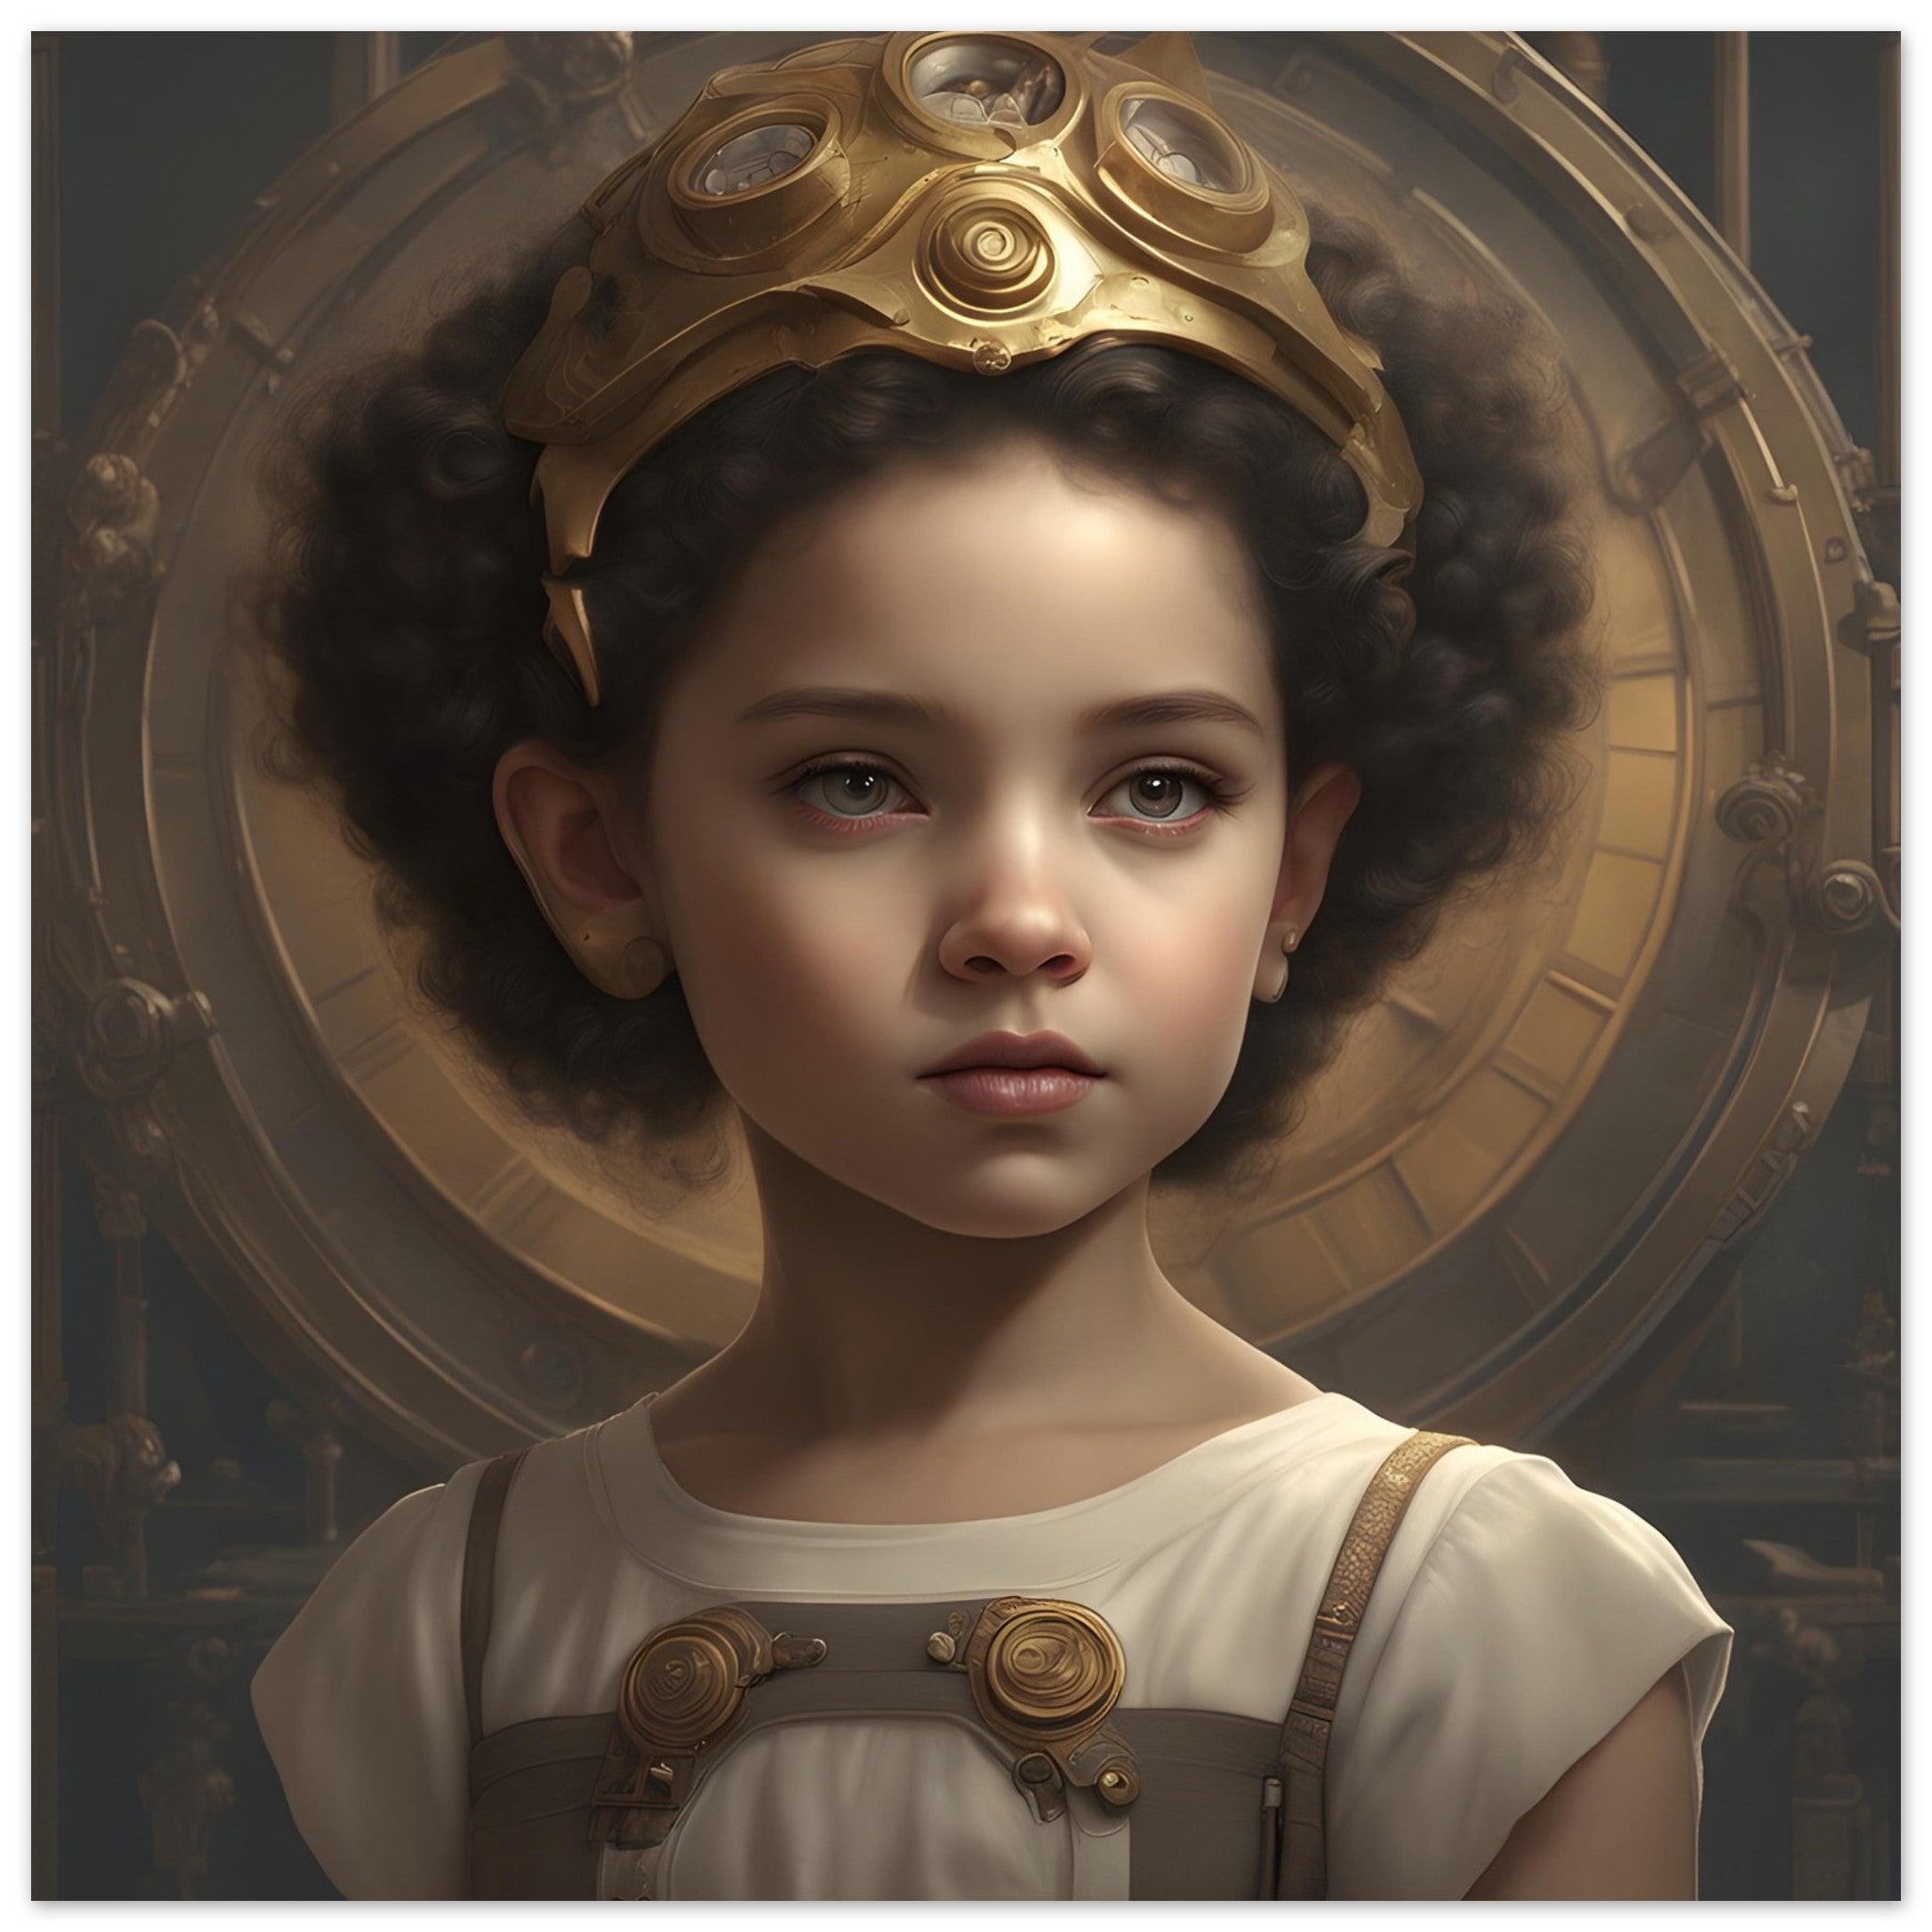 Steampunk Art - Princess Mia